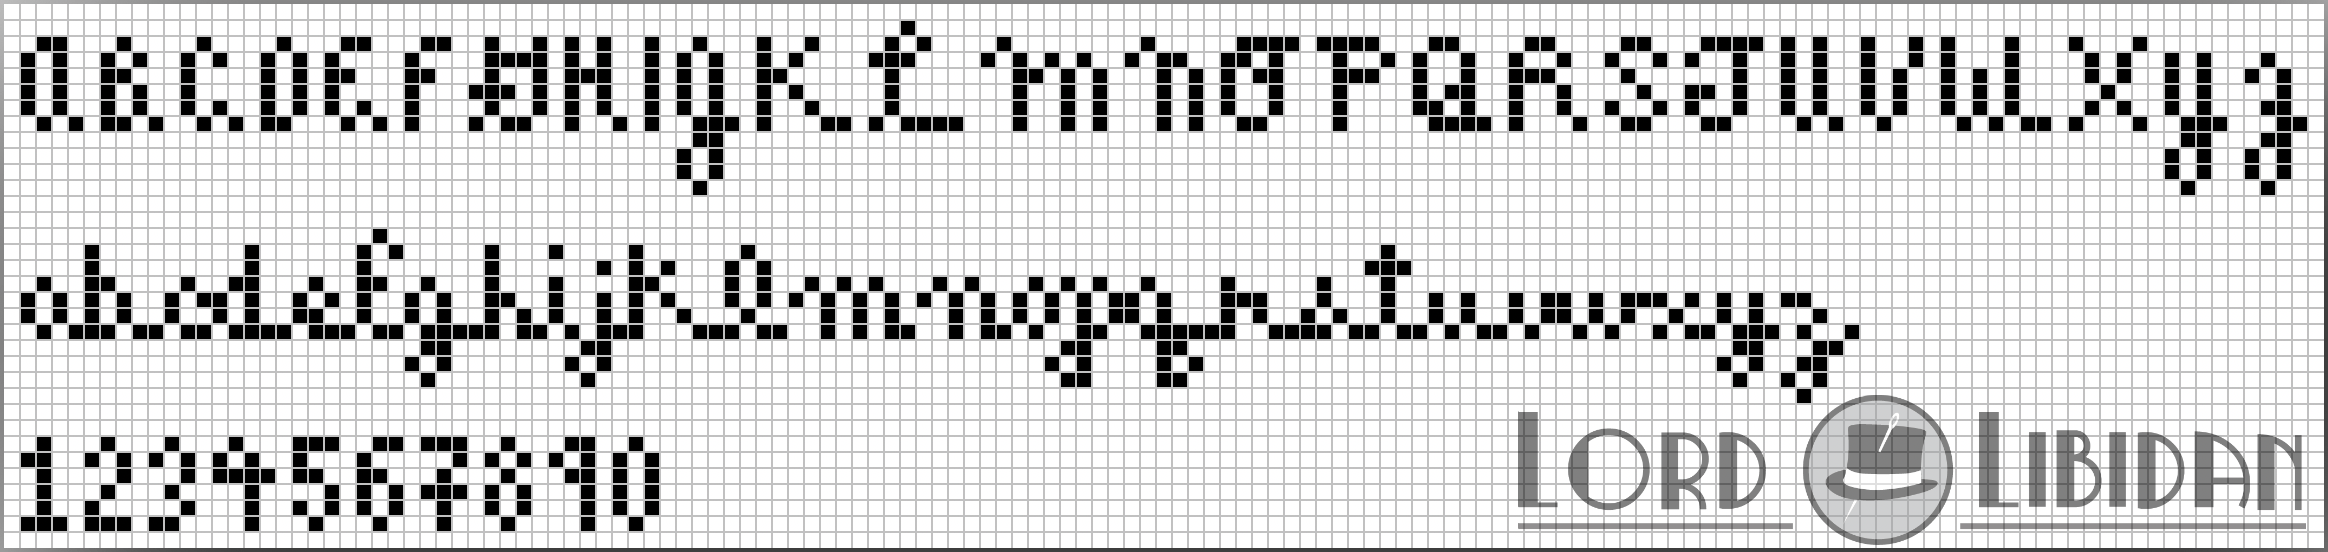 Cursive Cross Stitch Alphabet Pattern Free Download by Lord Libidan